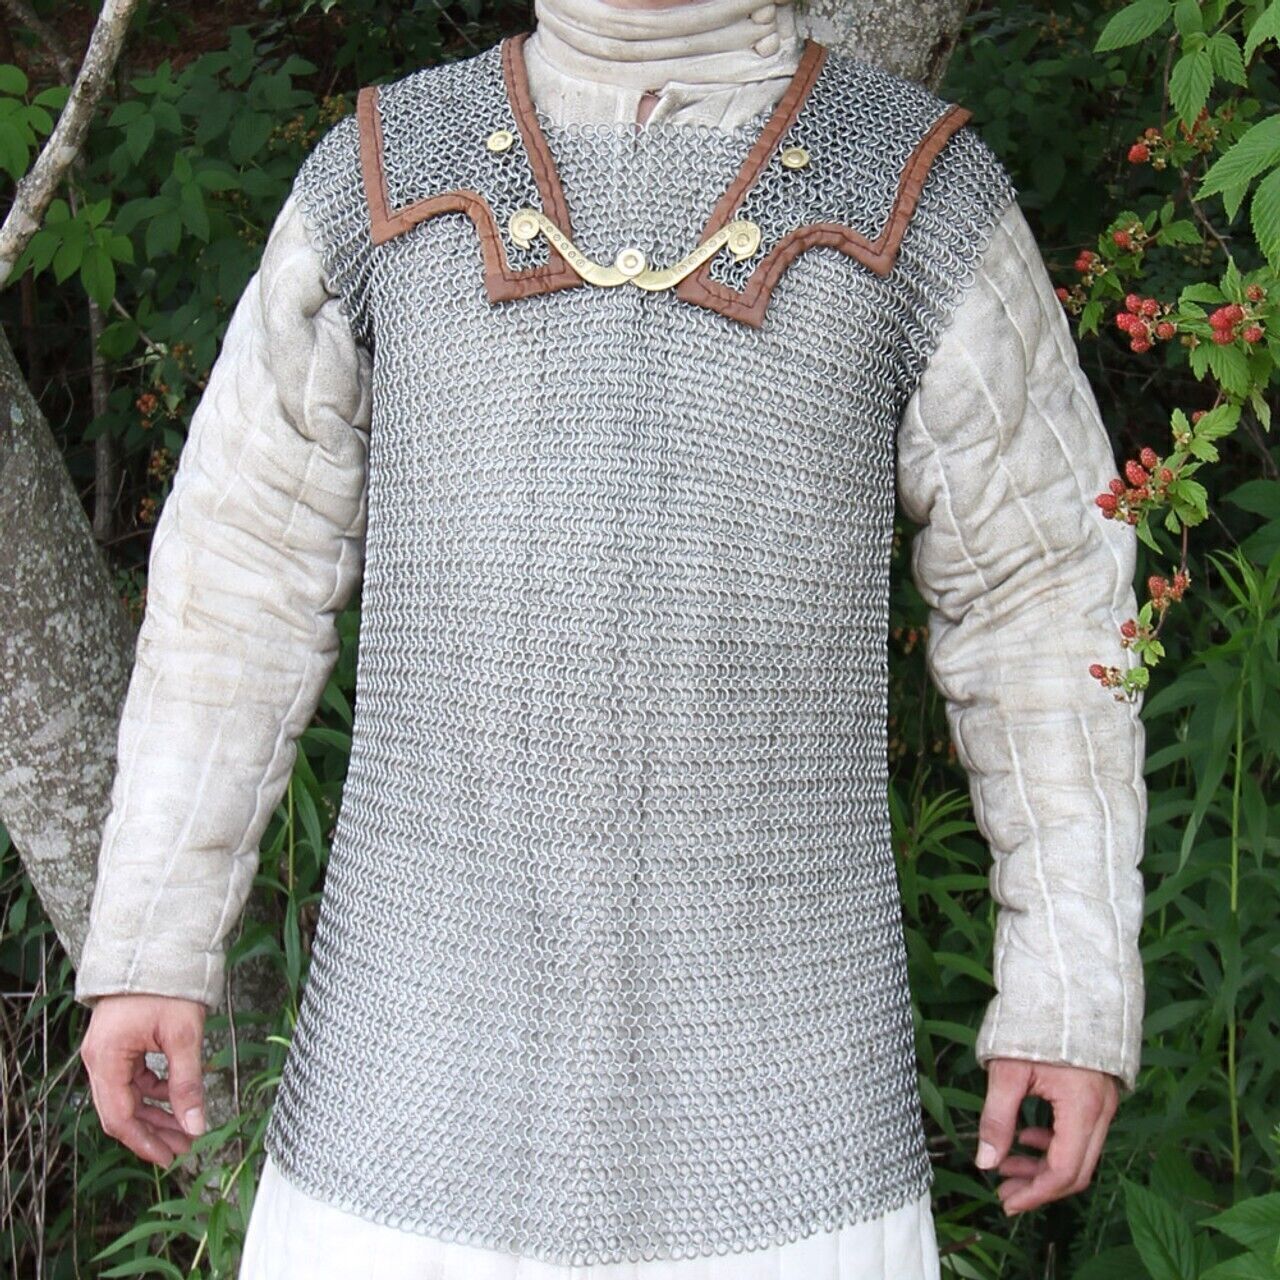 Lorica Hamata Medieval Roman Armor Chainmail Shirt Cosplay Reenactment LARP